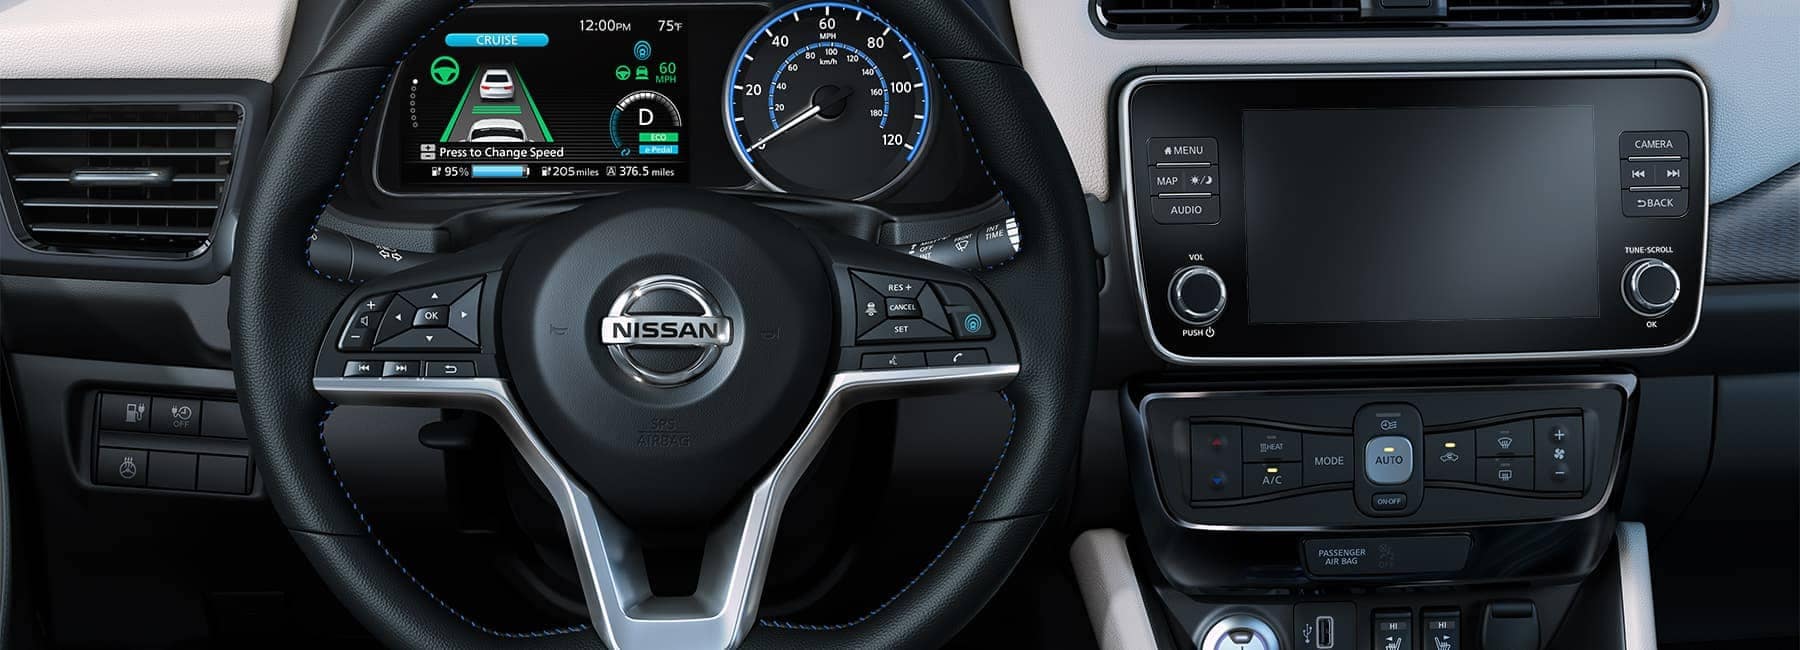 2020-nissan-leaf-interior-steering-wheel